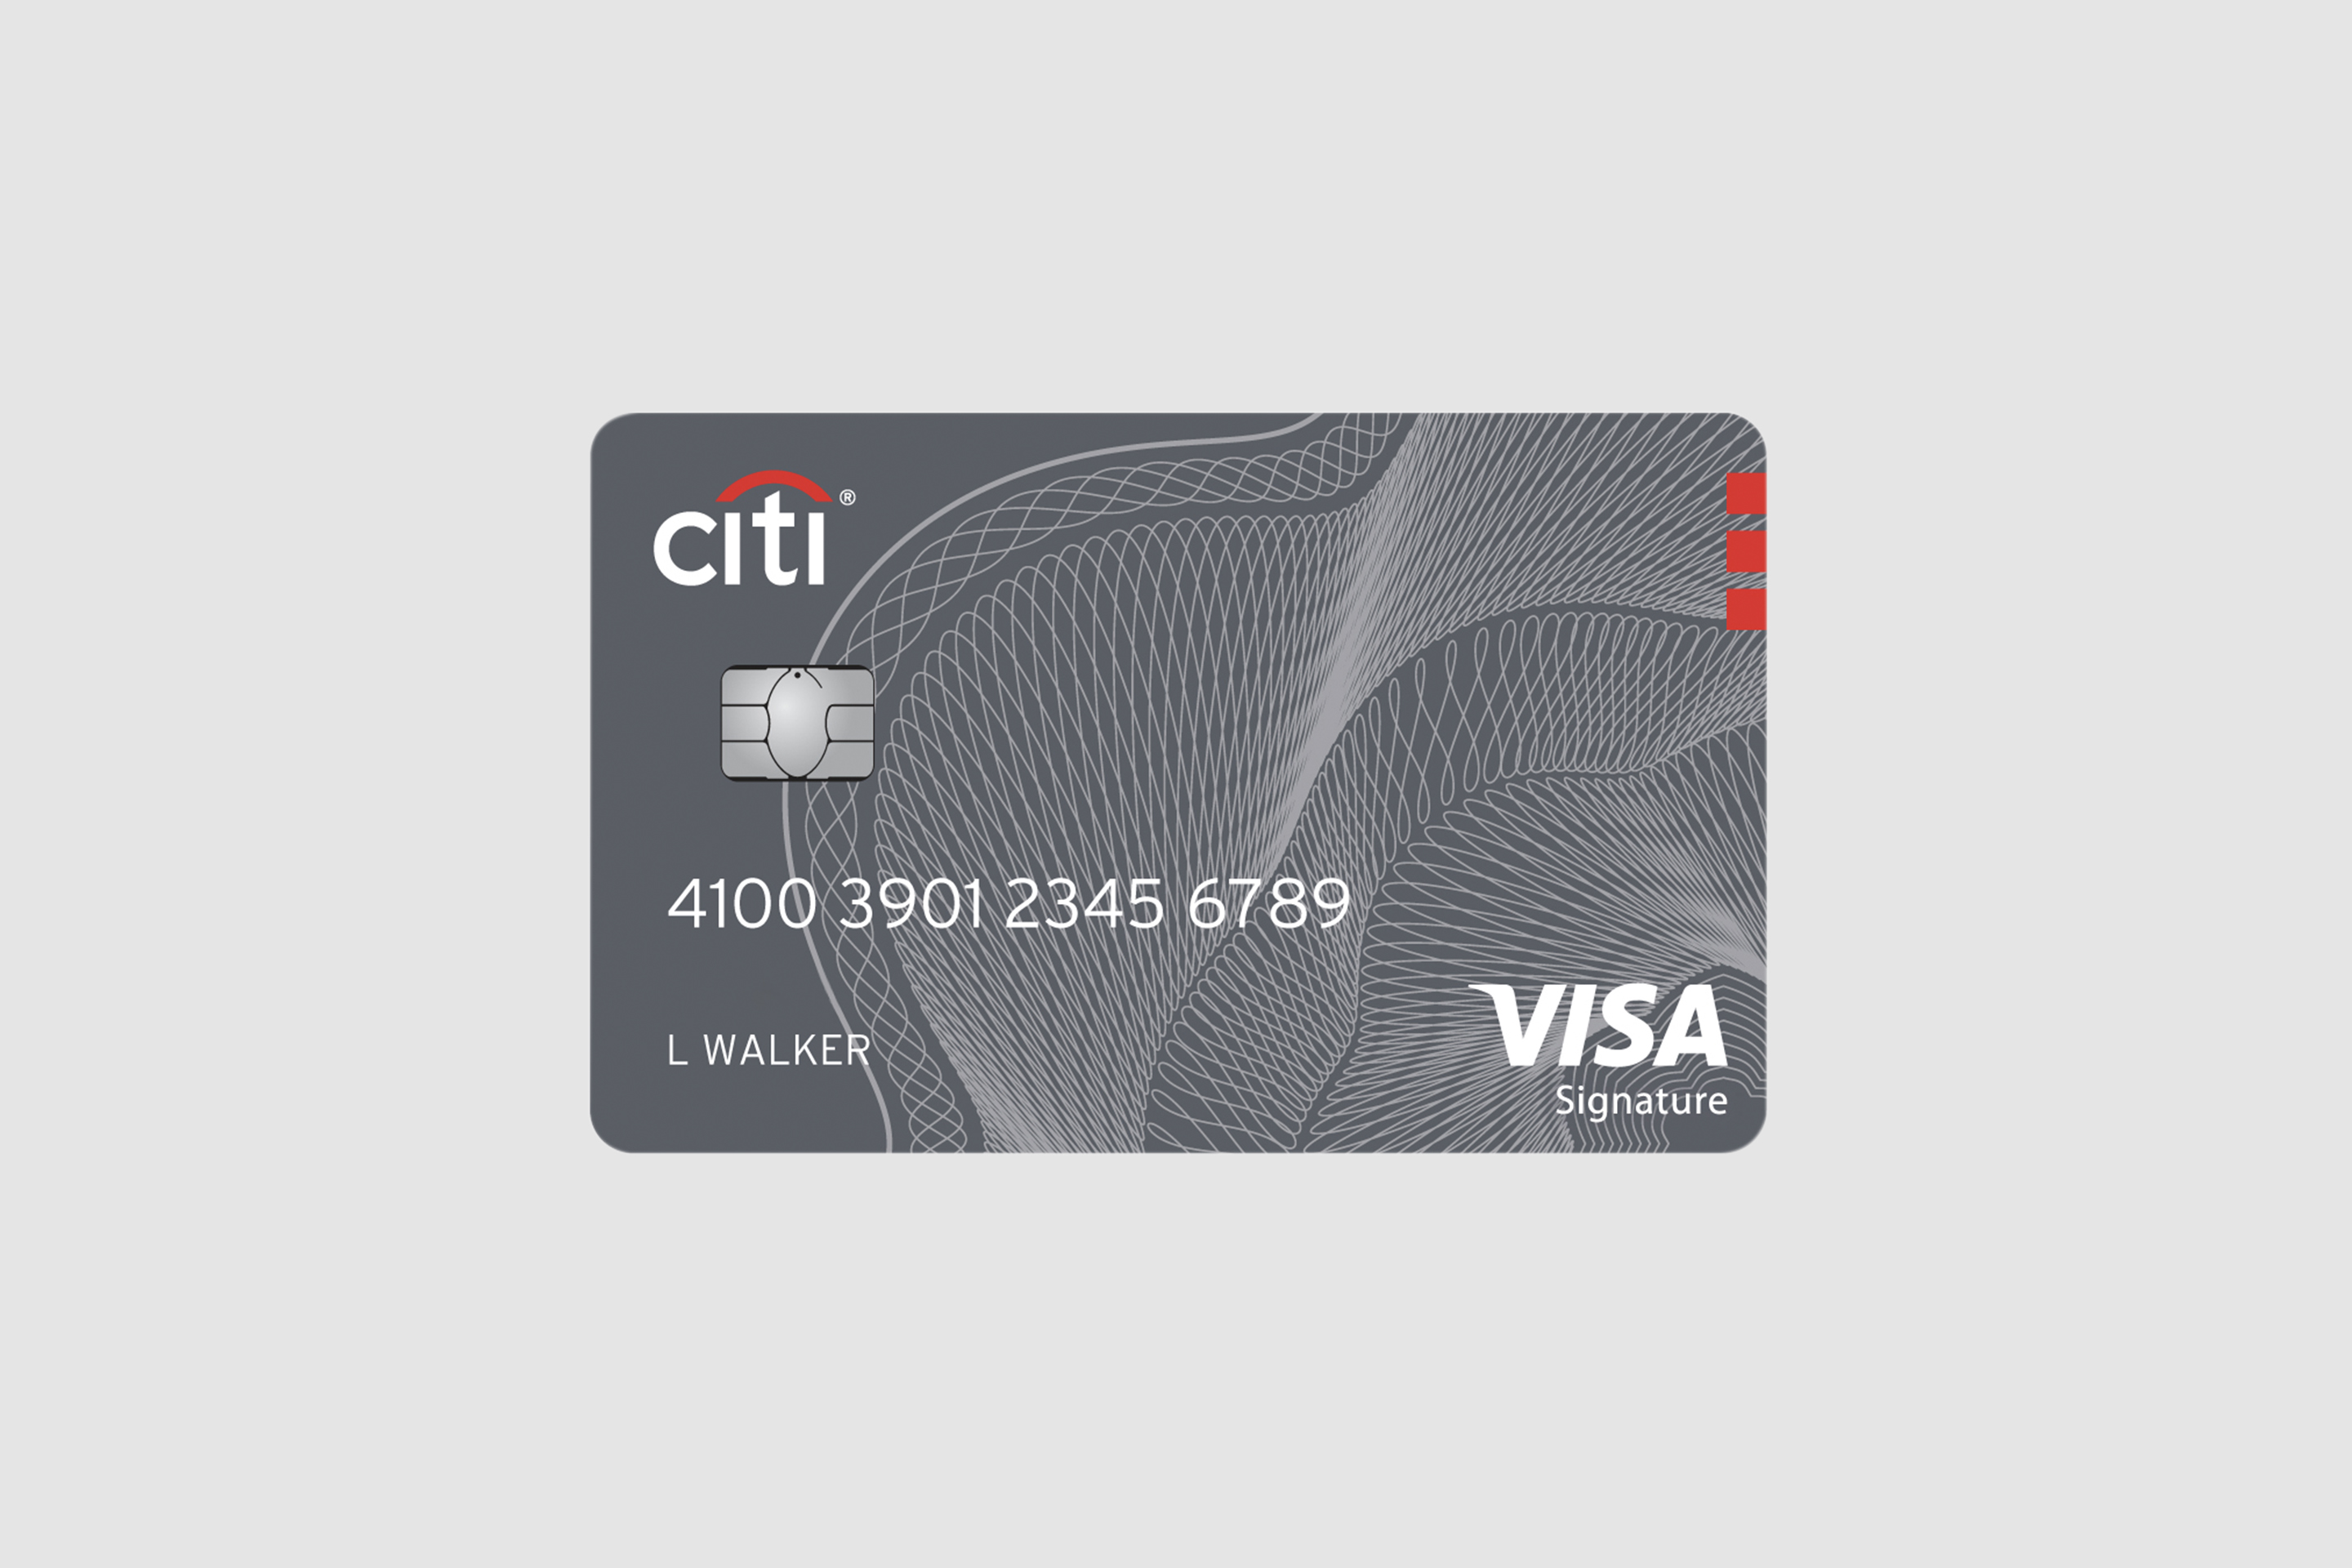 Costco Anywhere. Visa Card by Citi